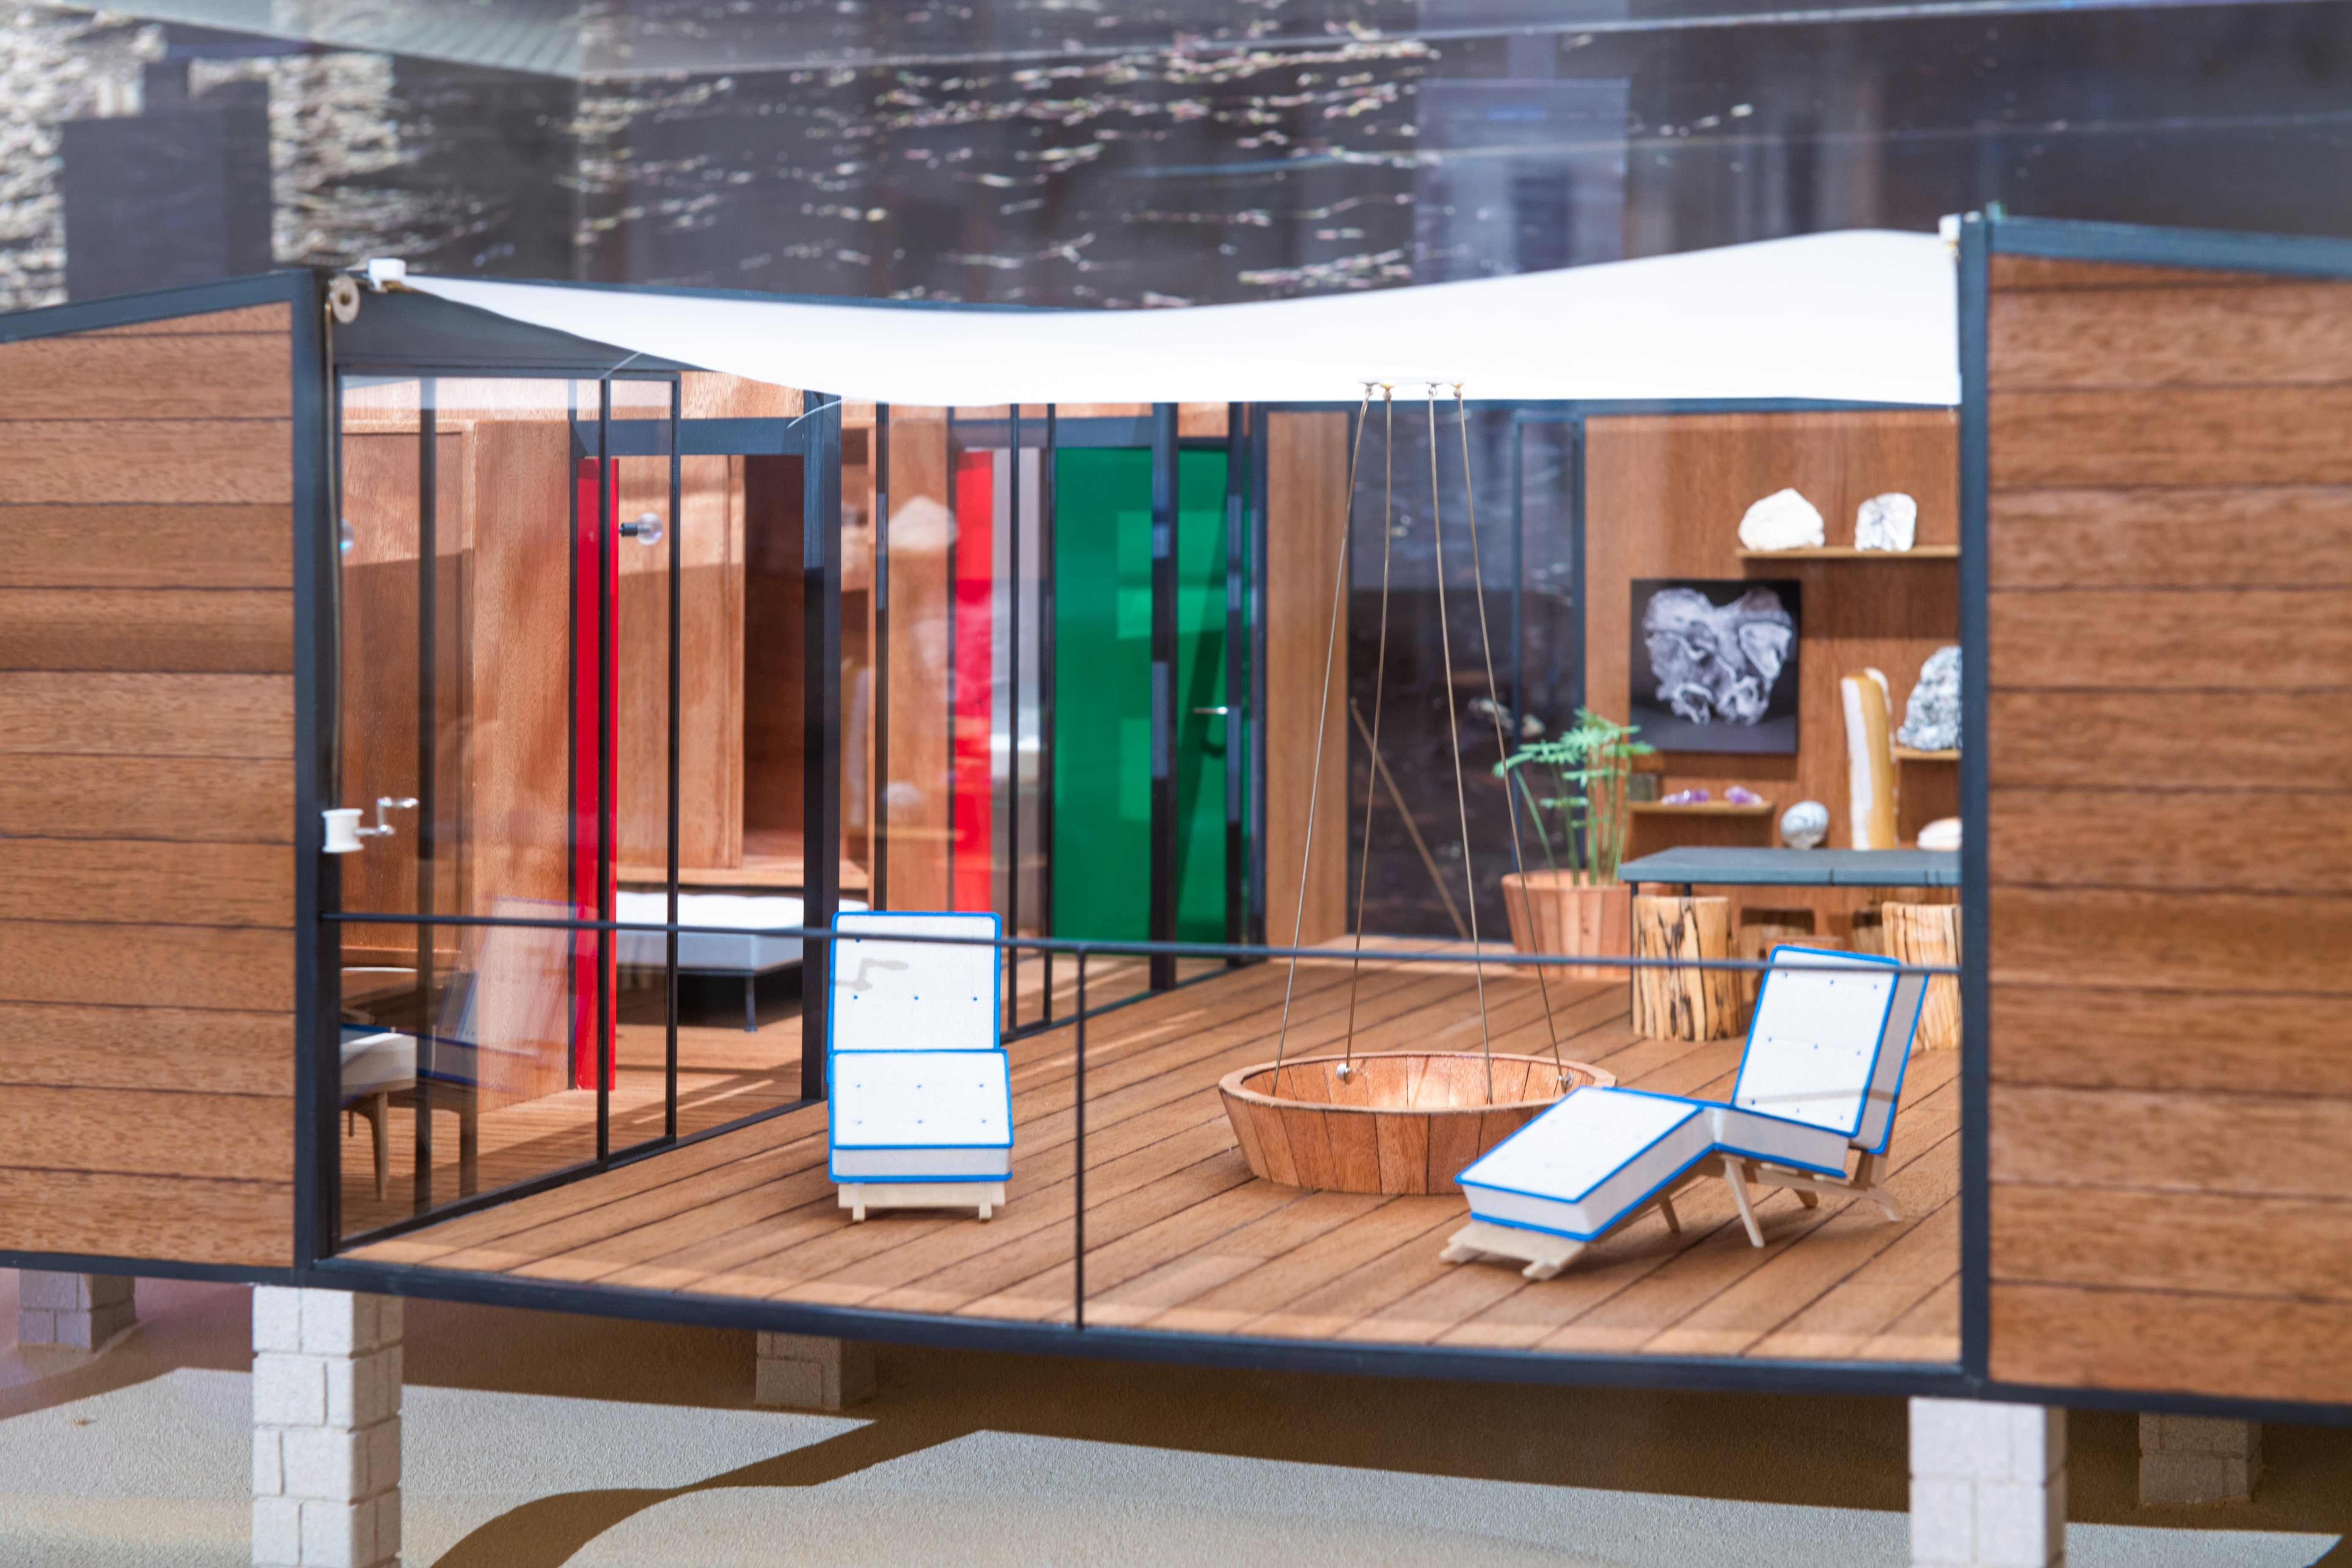 The Espace Louis Vuitton Venezia - Charlotte Perriand and I